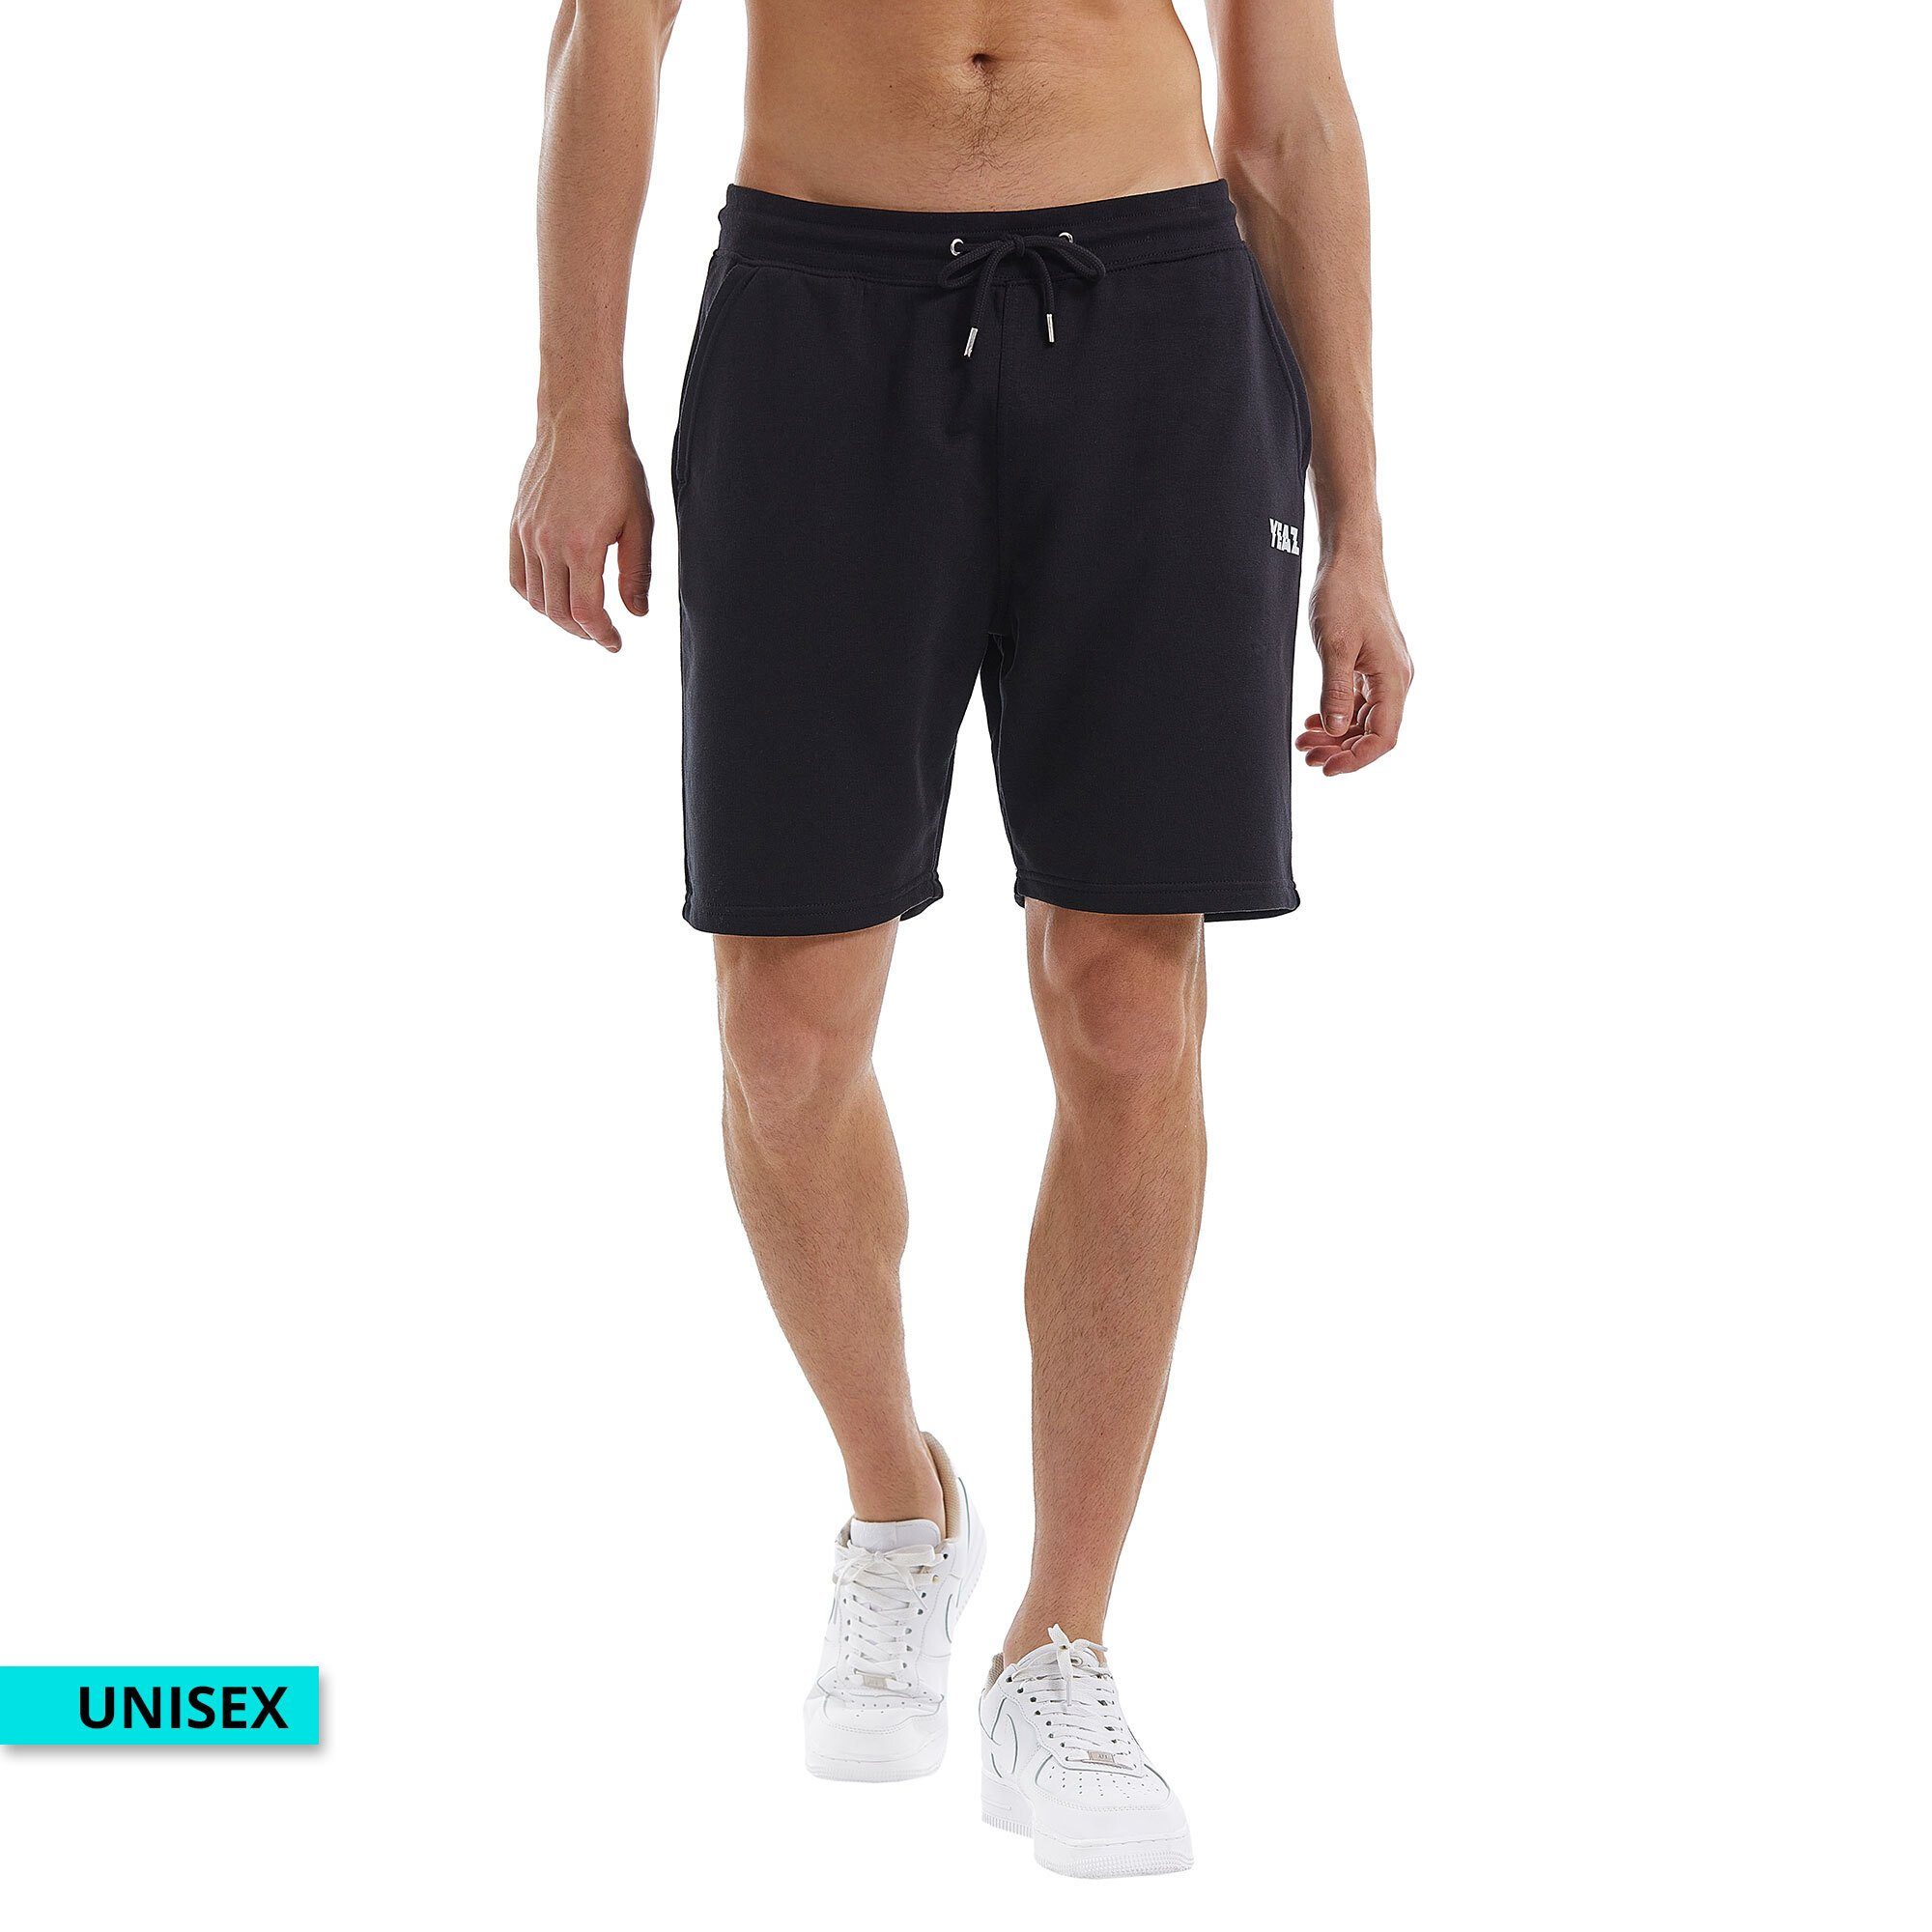 YEAZ Yogashorts shorts (2-tlg) CHAX schwarz